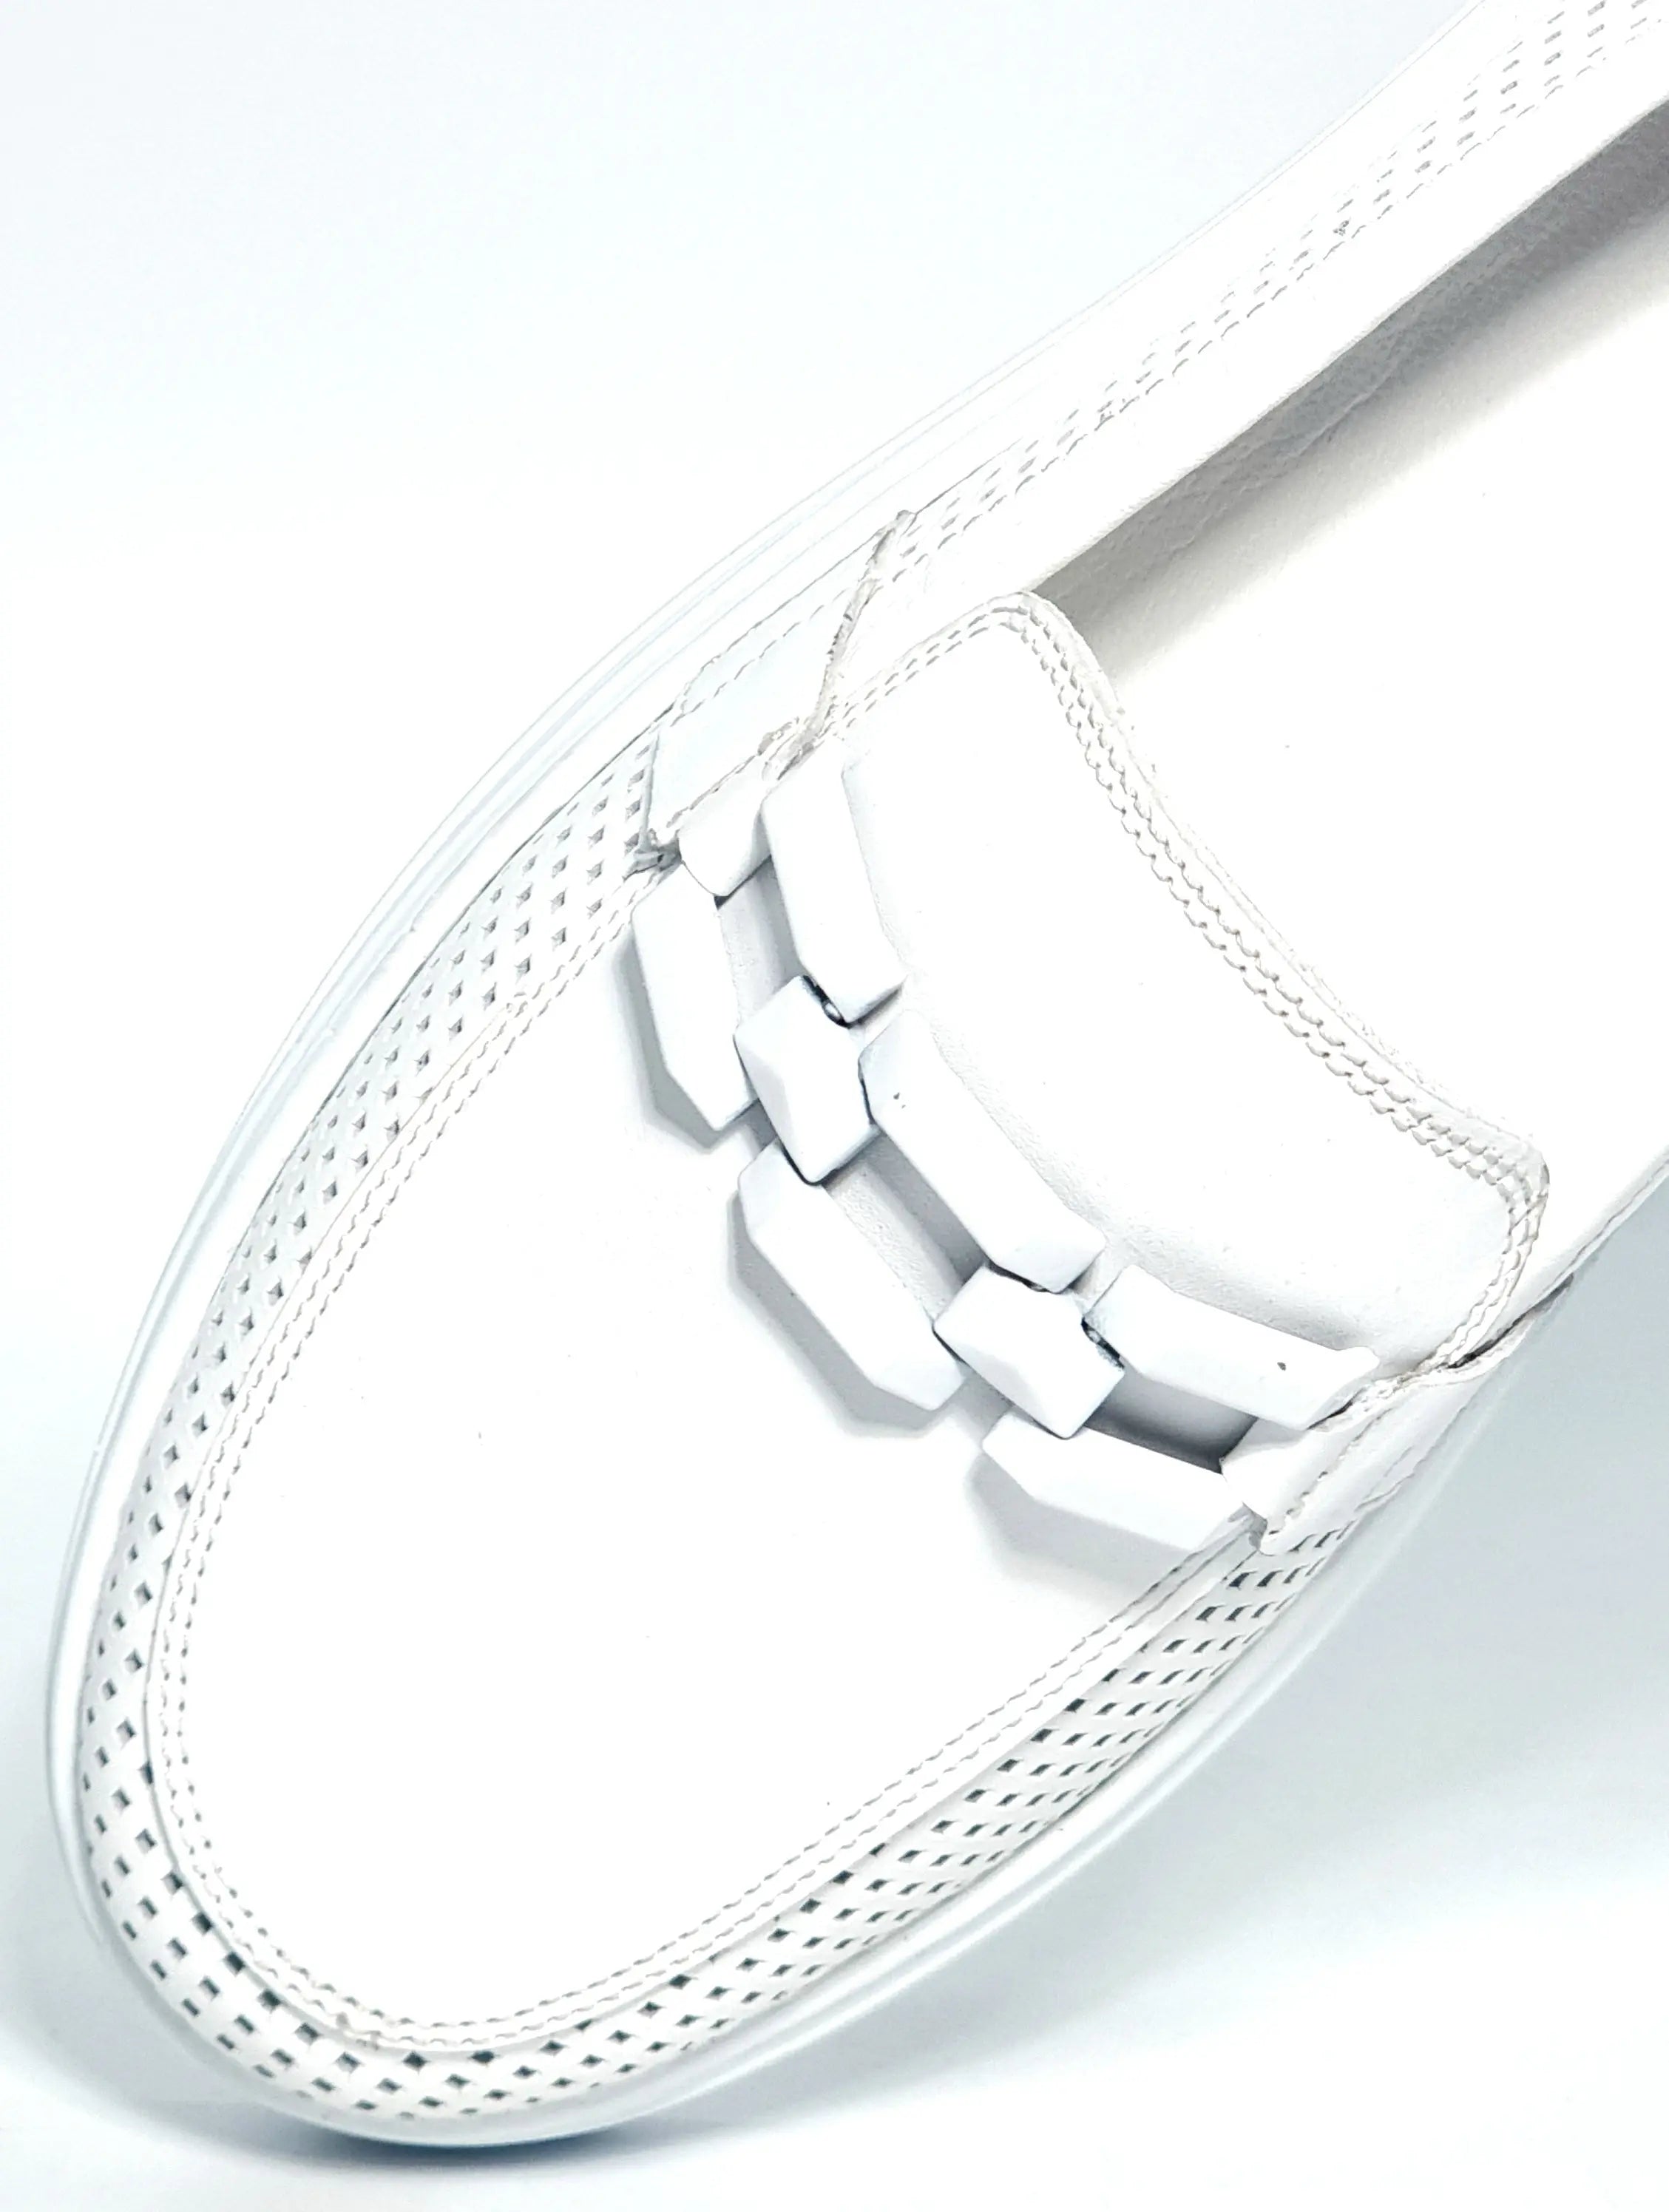 WINSSTO LADIES 1004 WHITE Sneakers | familyshoecentre